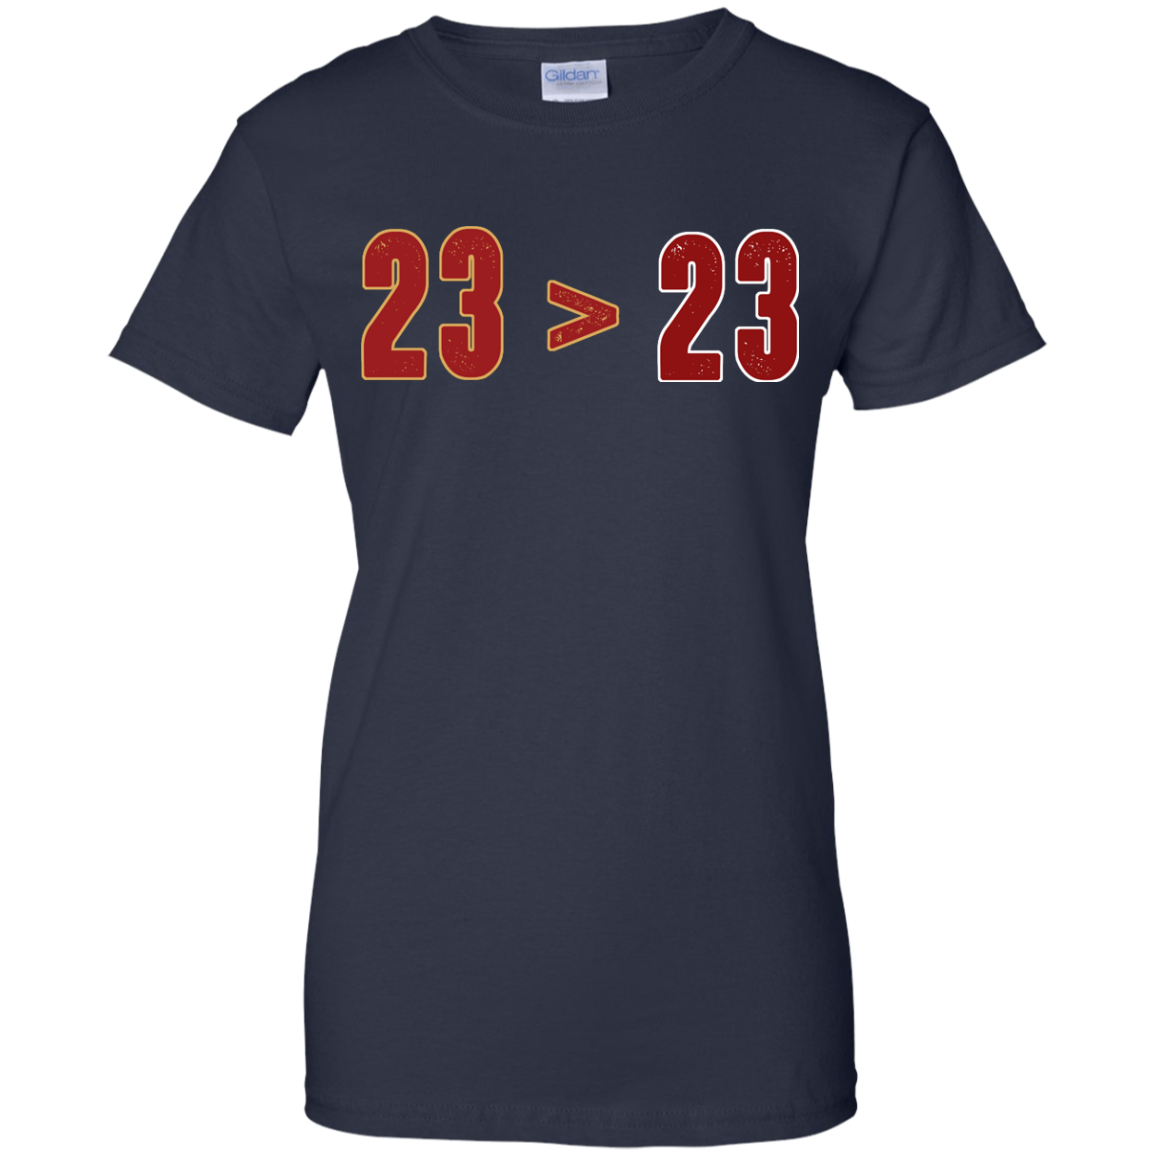 23 Greater than 23 T-shirt, LeBron Greater Than Jordan T-shirt,Tank top ...